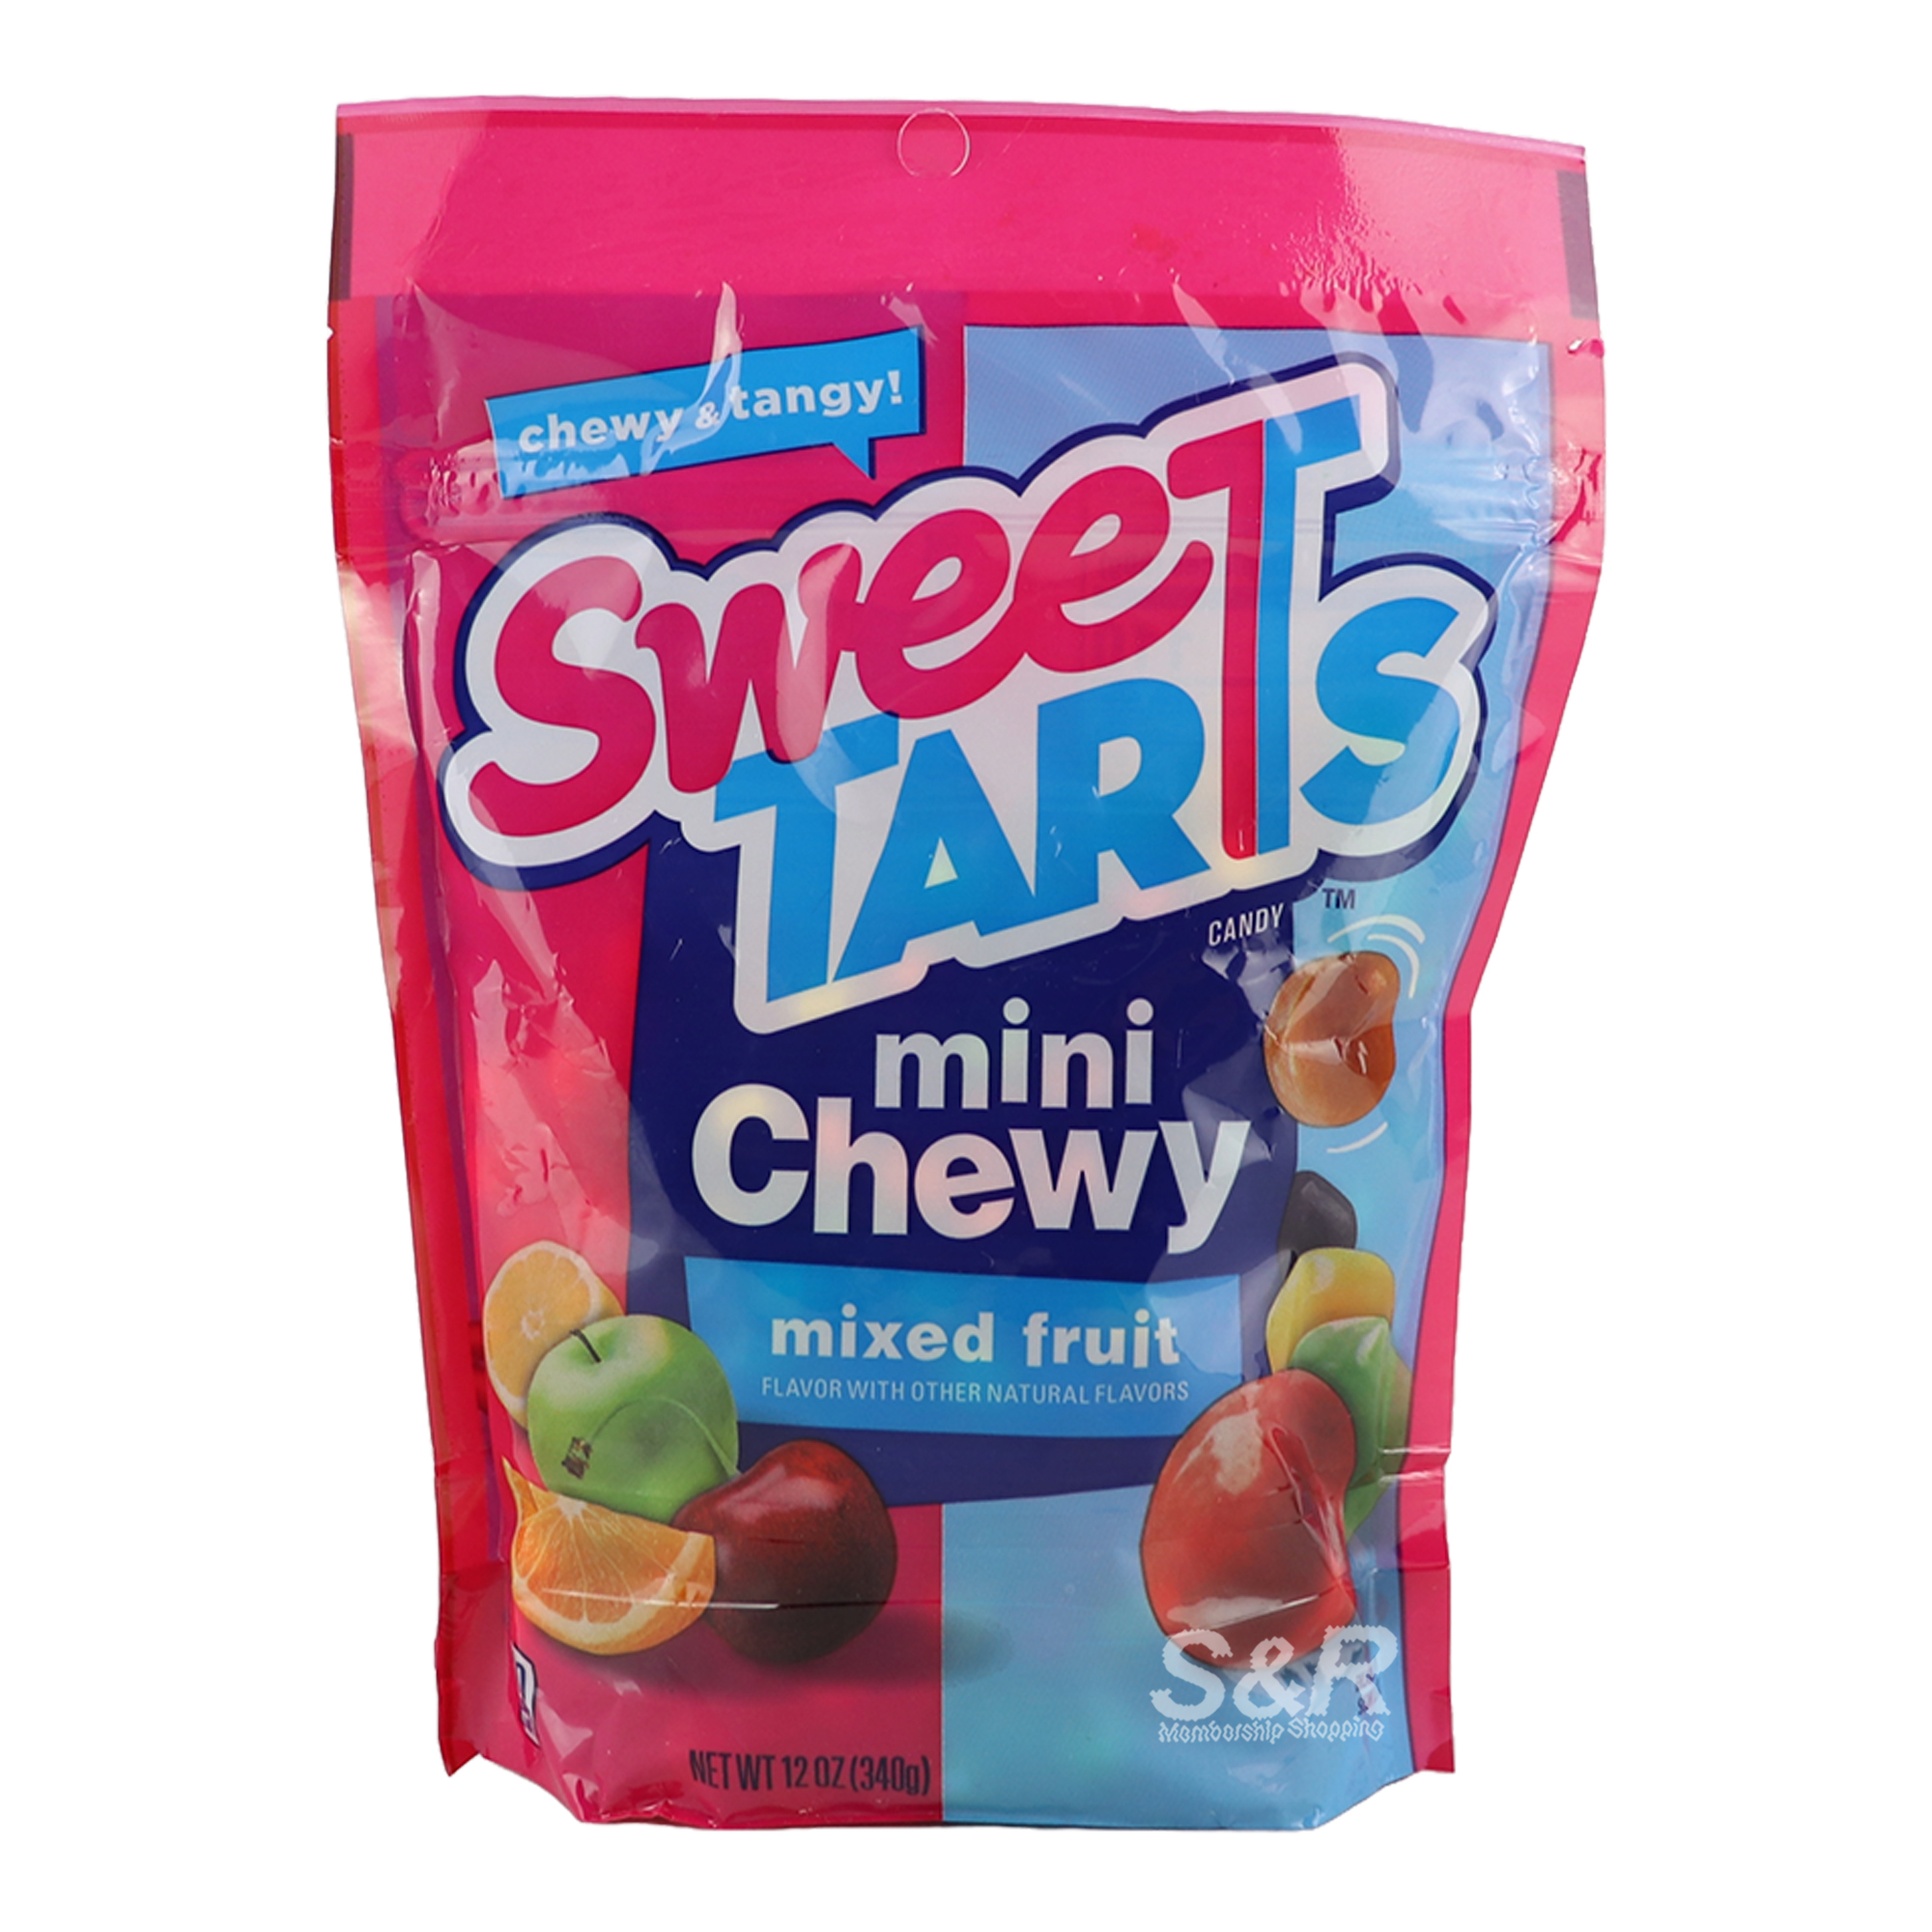 Sweet Tarts Mini Chewy Candy 340g